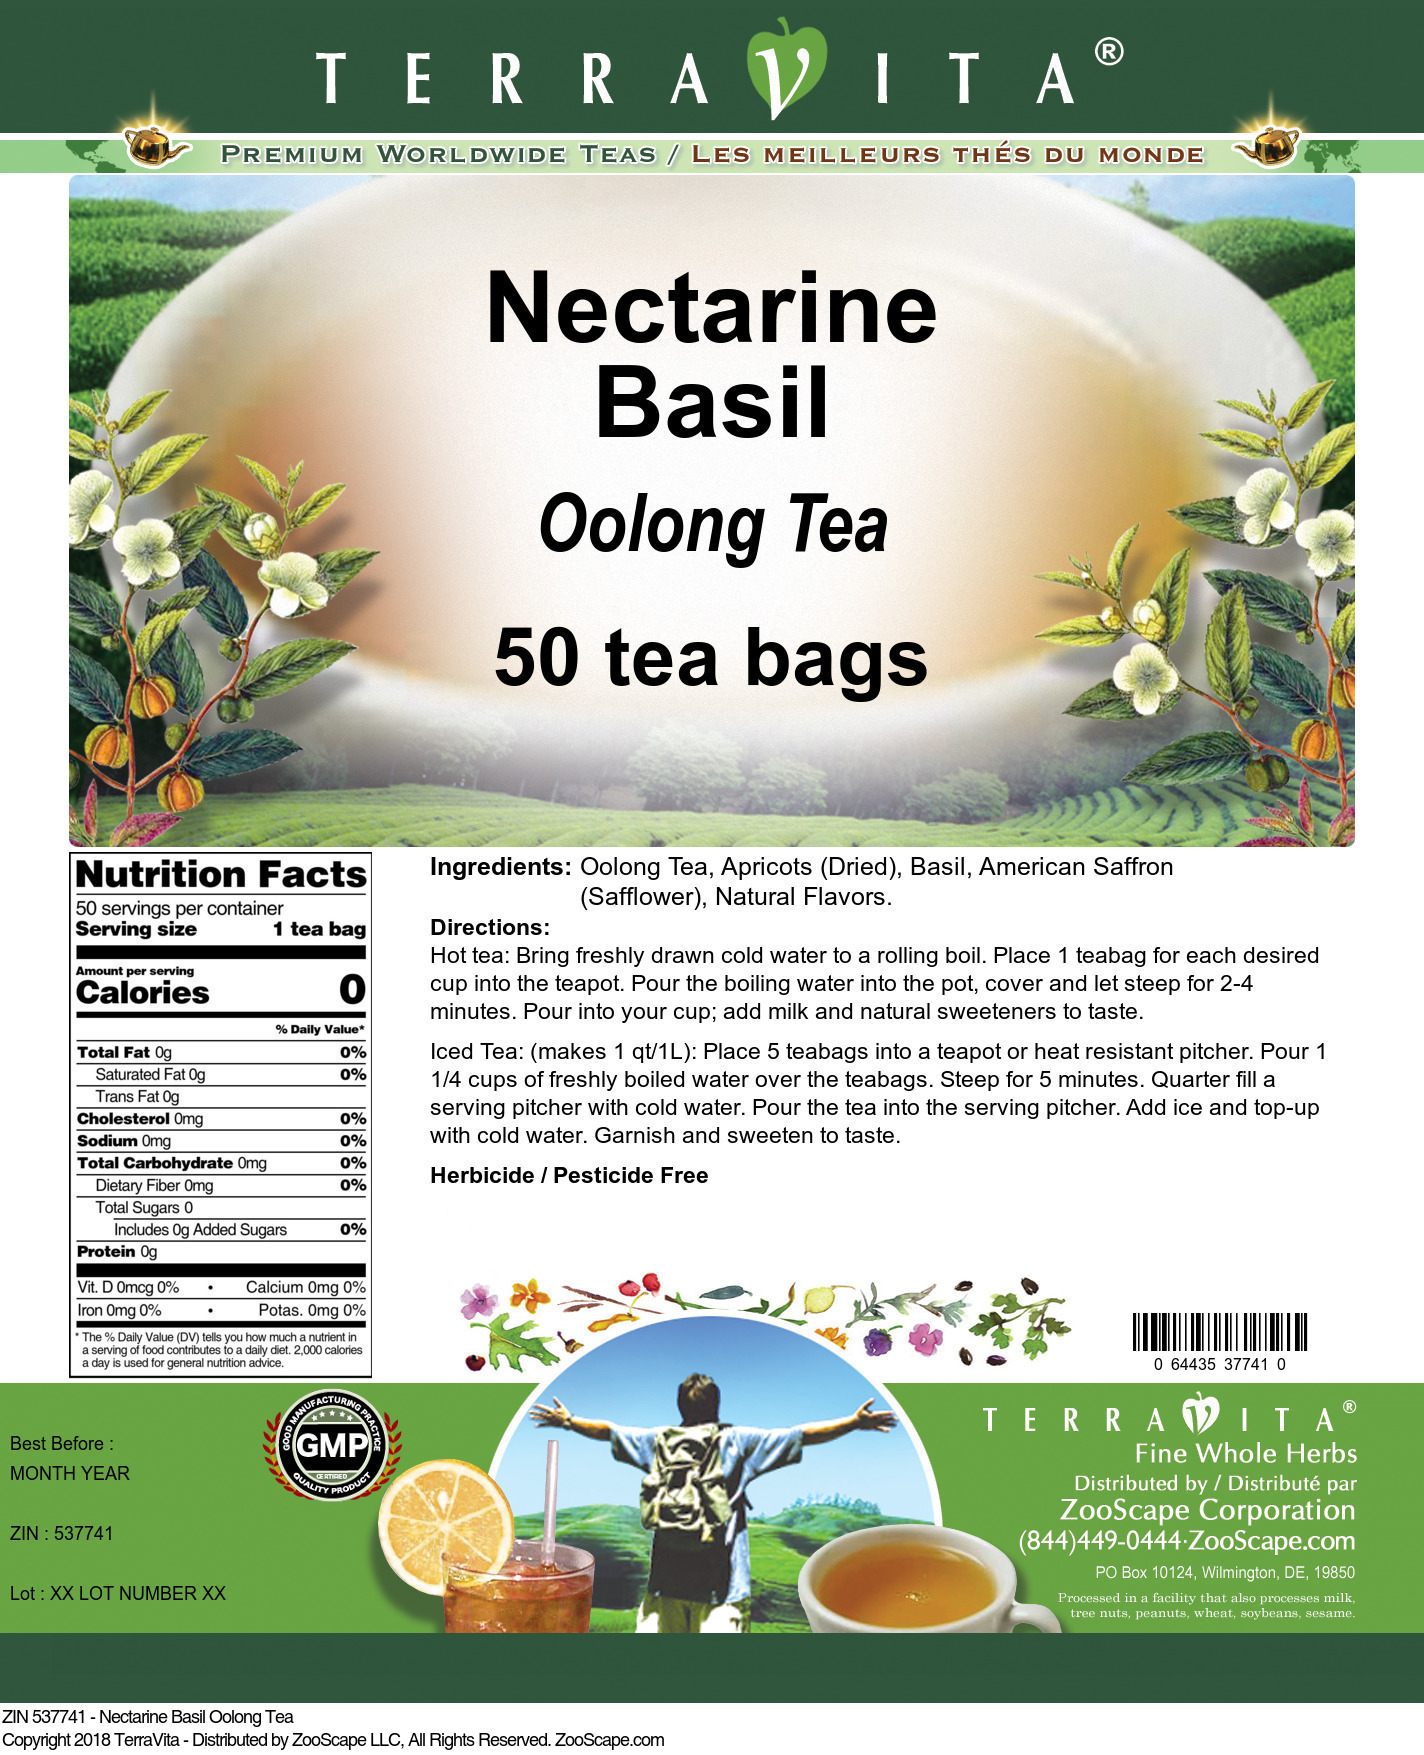 Nectarine Basil Oolong Tea - Label